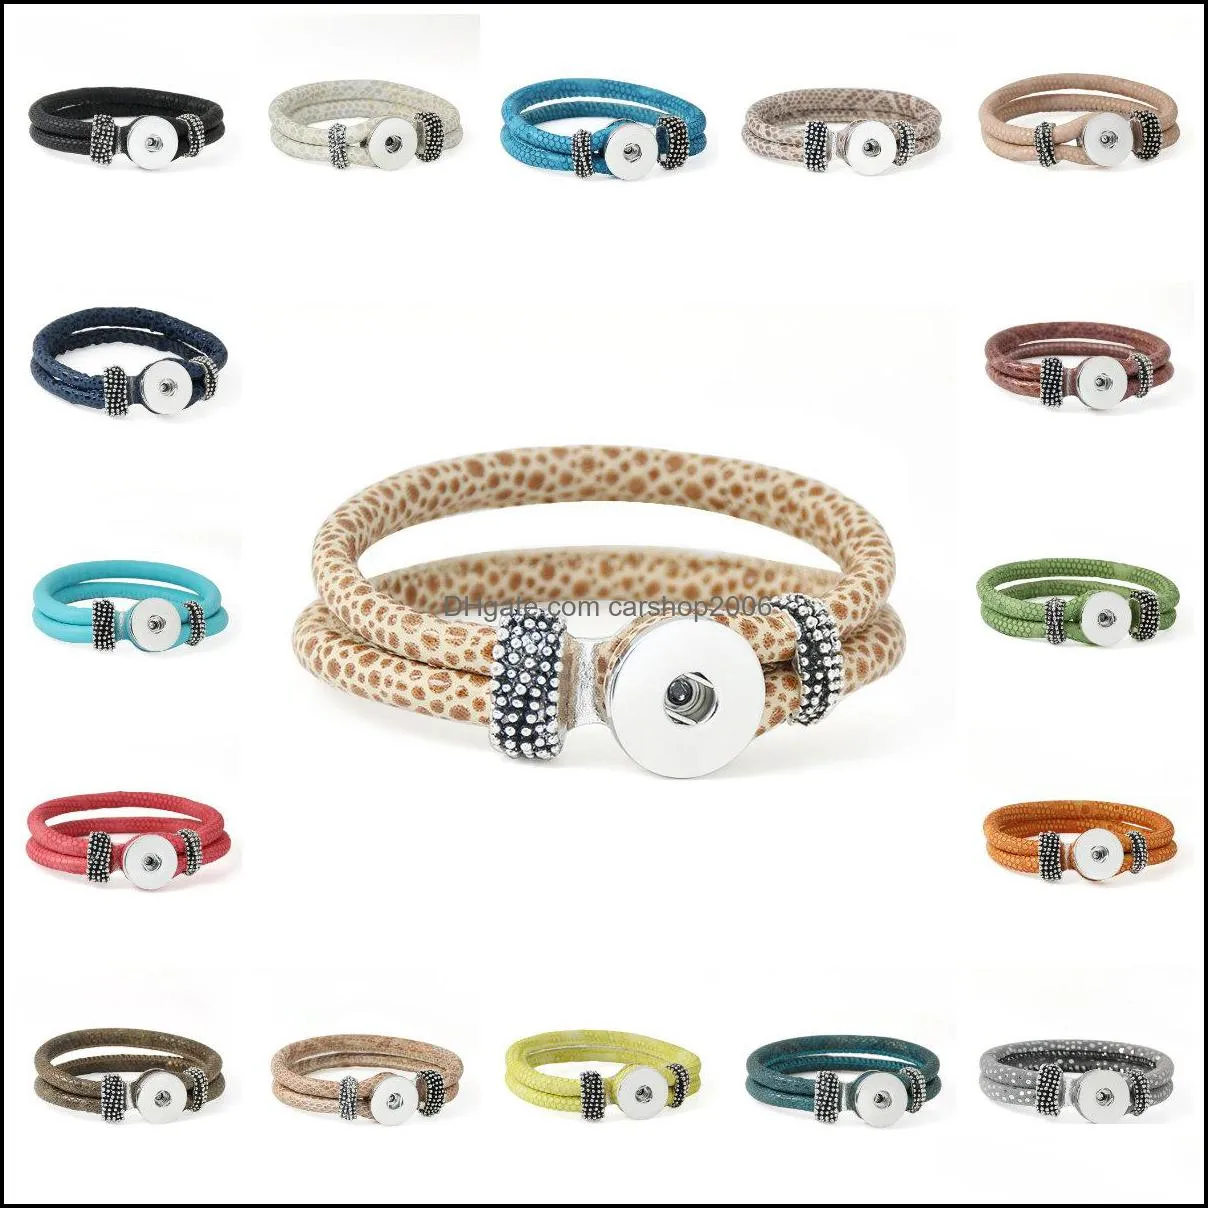 pretty stretch bracelet snap diy snaps buttons jewelry 18mm charm bracelets silver ginger snap jewelry infinity leather carshop2006